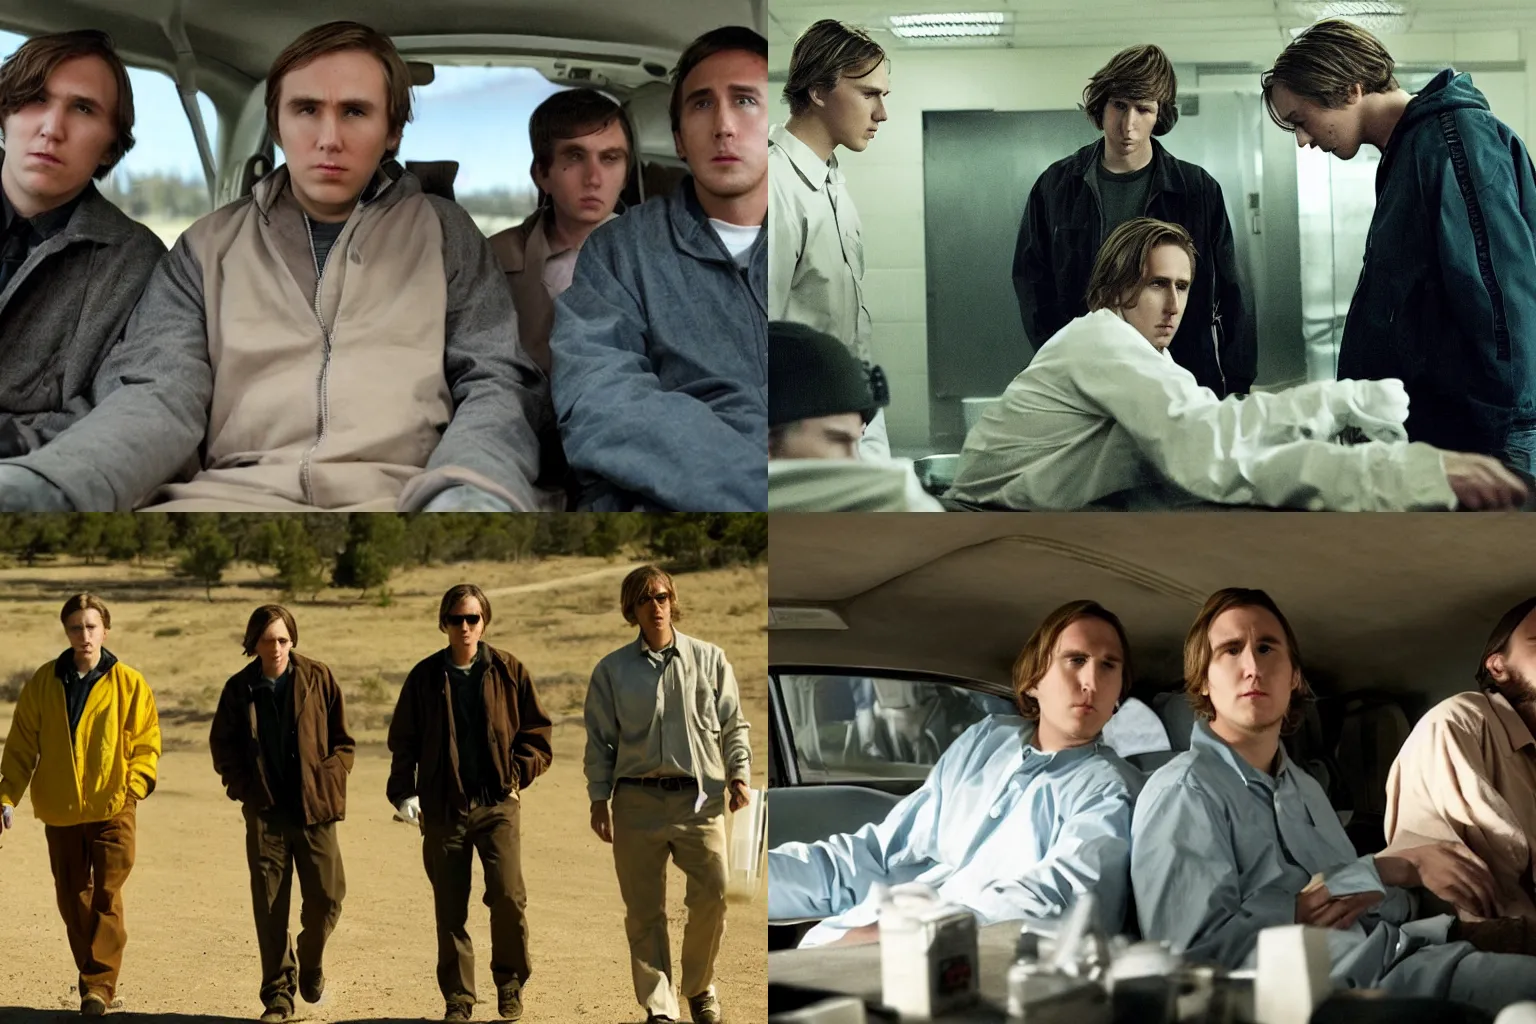 Prompt: Paul Dano, Jake Gyllnehaal, and Ryan Gosling in Breaking Bad (2008), film still